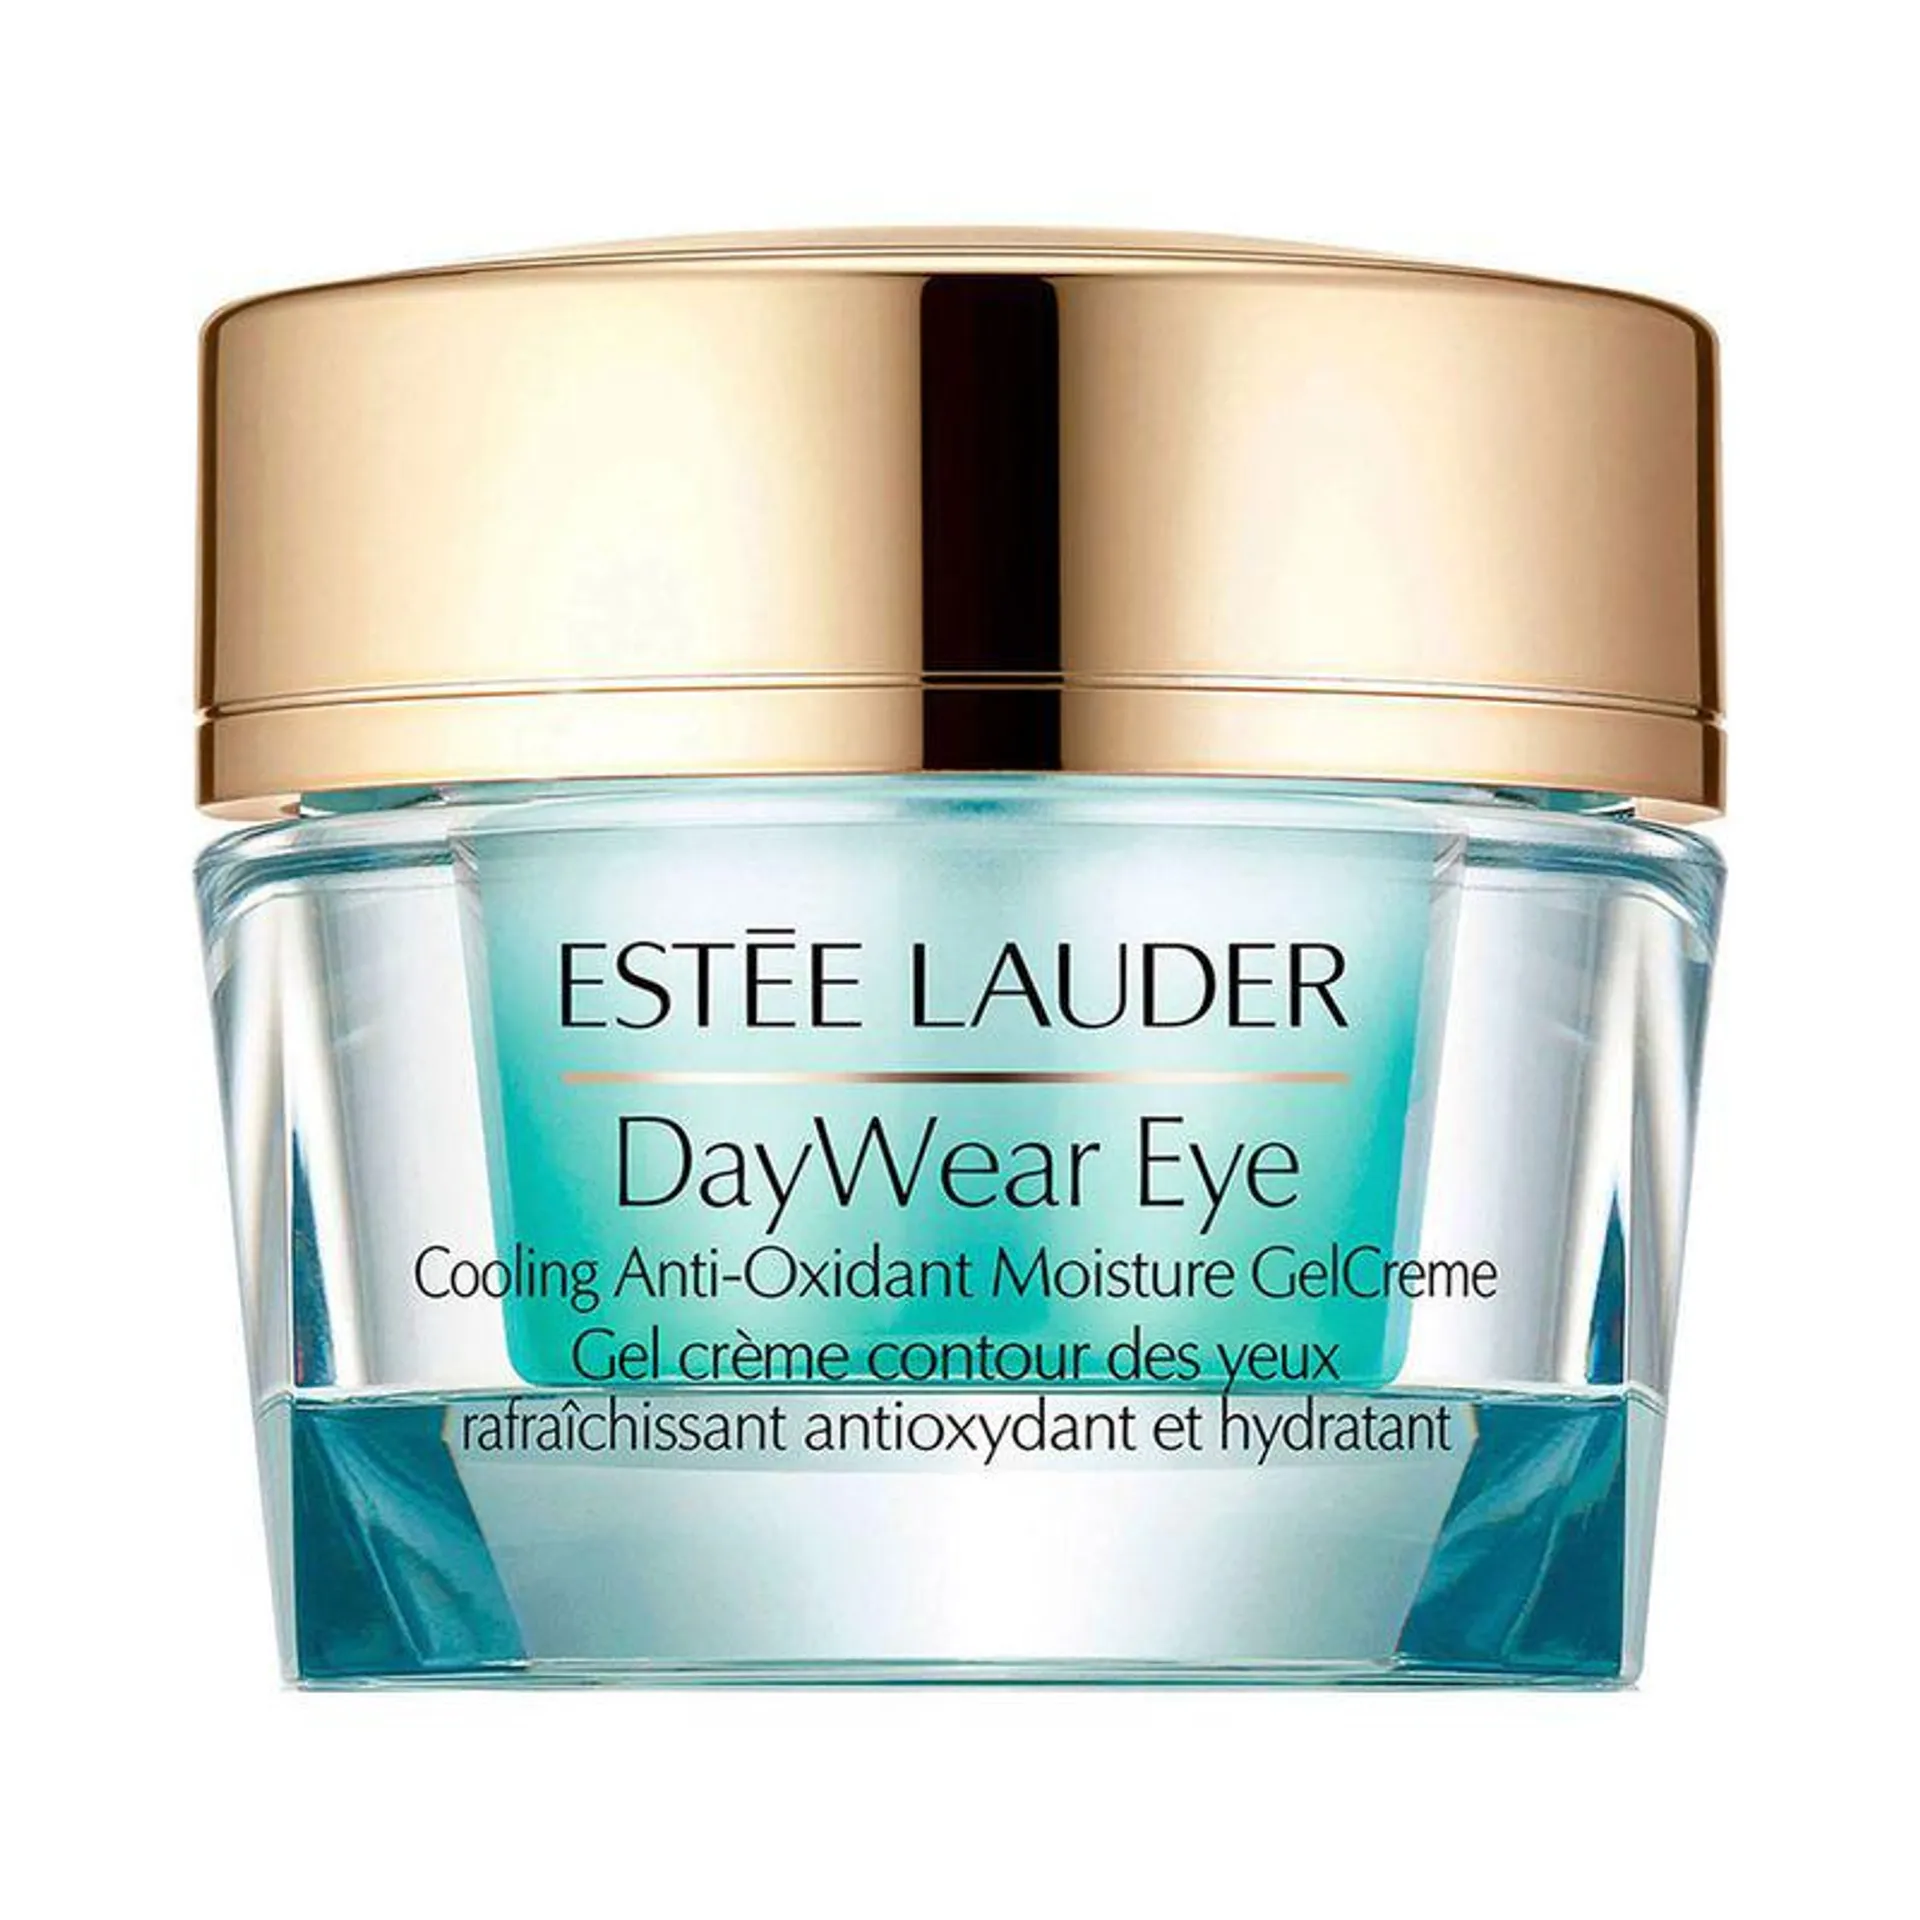 DayWear Eye Cooling Anti-Oxidant Moisture Gel Creme - Estée Lauder